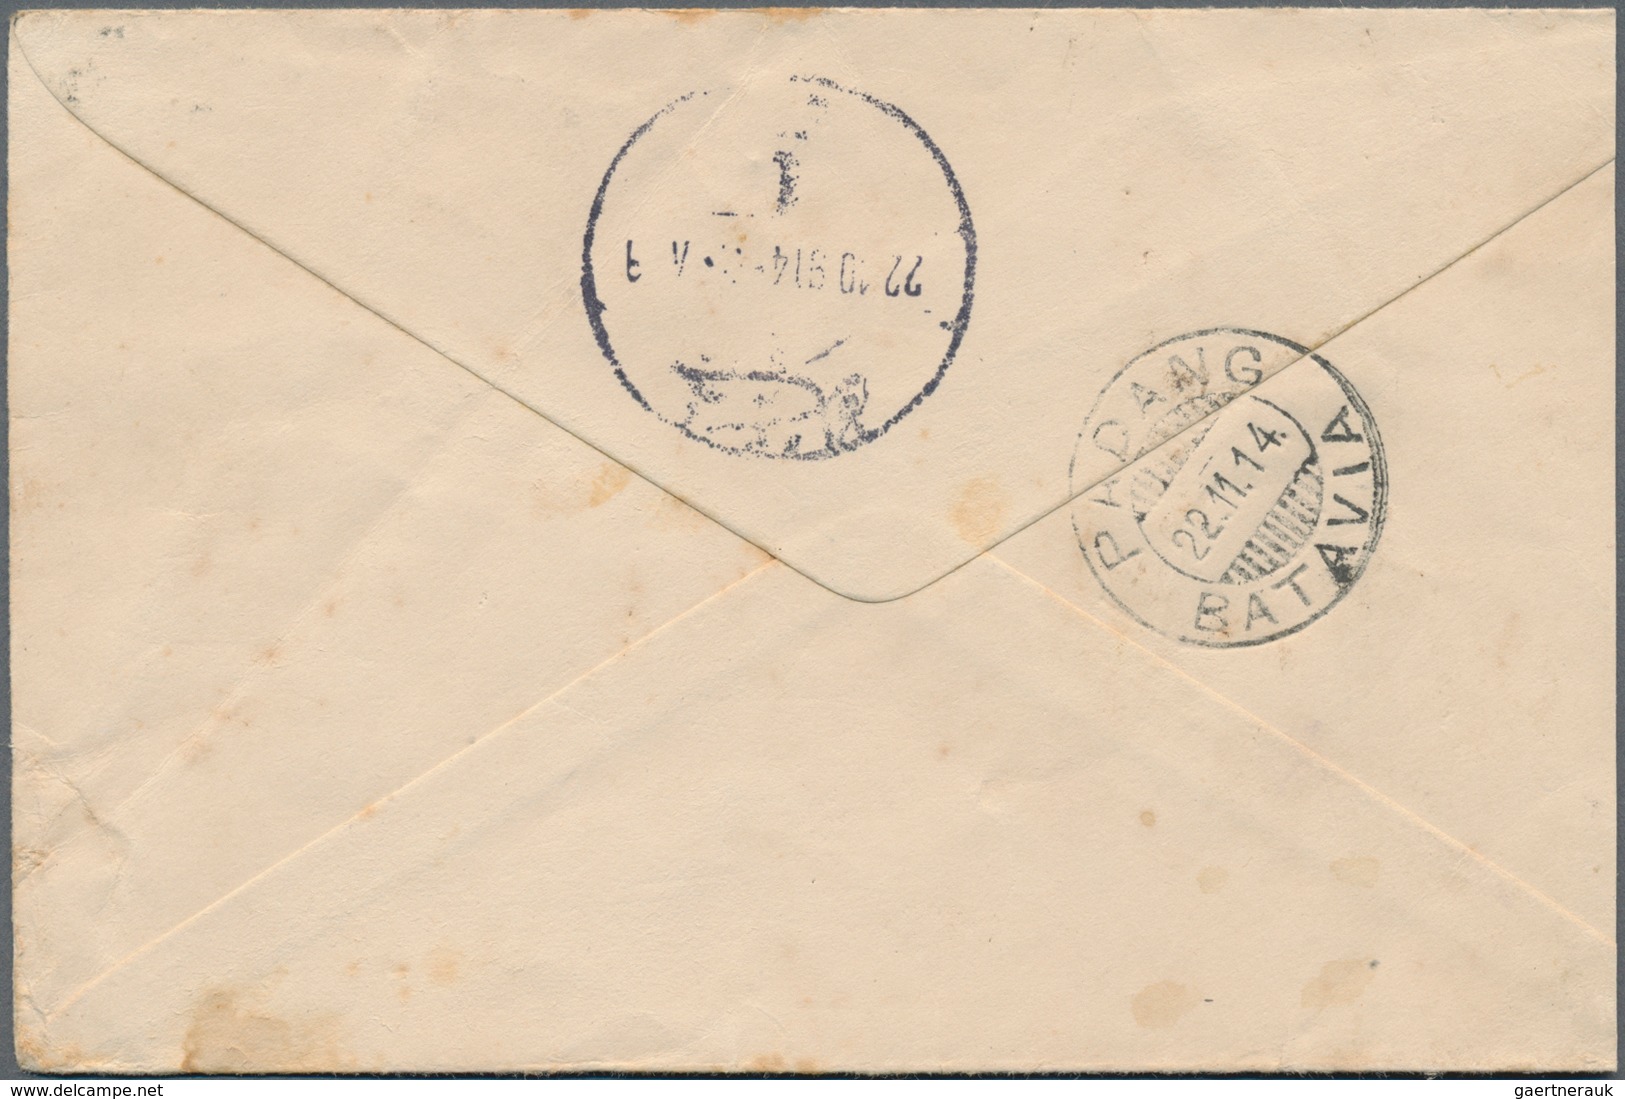 Saudi-Arabien - Stempel: 1914, "MECQUE 2 - 21/10/14" Black Cds. On Turkey 1 Pia. Blue Postal Station - Saudi-Arabien